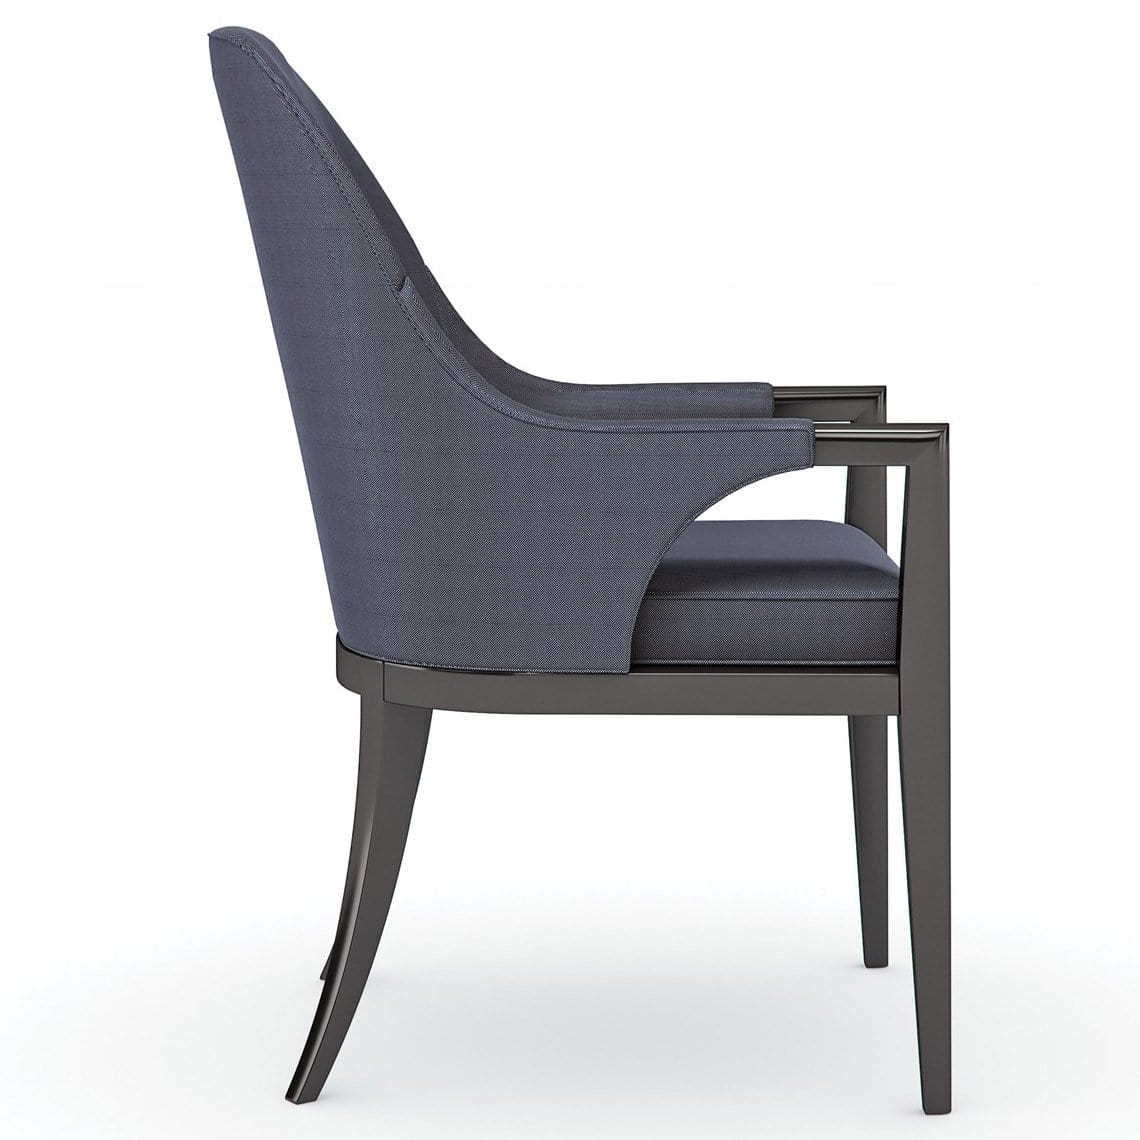 Caracole Natural Choice Arm Chair Furniture caracole-CLA-020-275